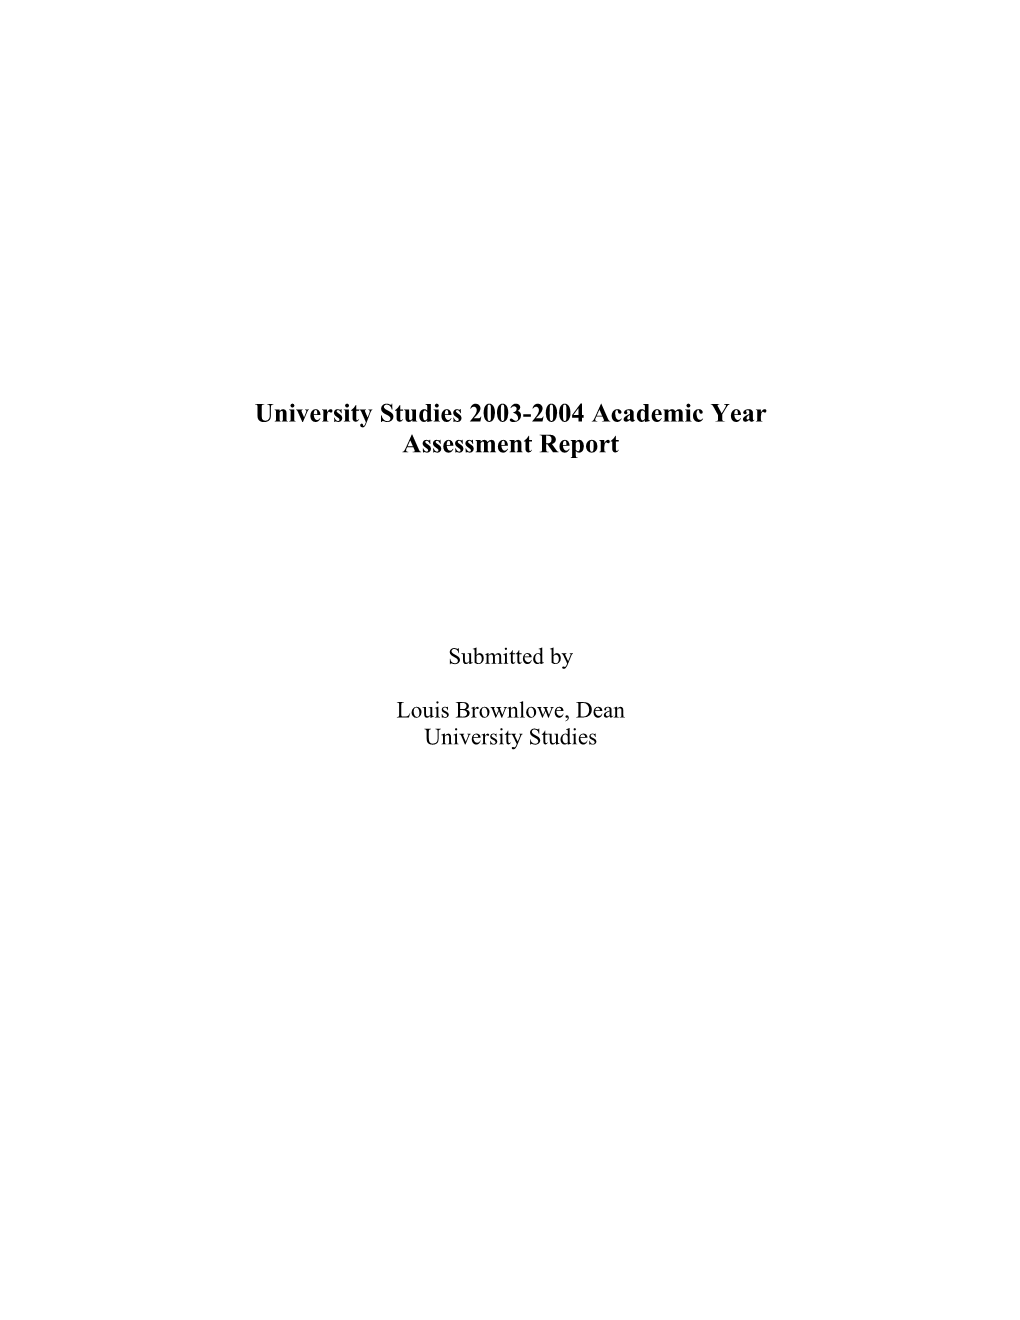 University Studies 2003-2204 Academic Year Assessment Report